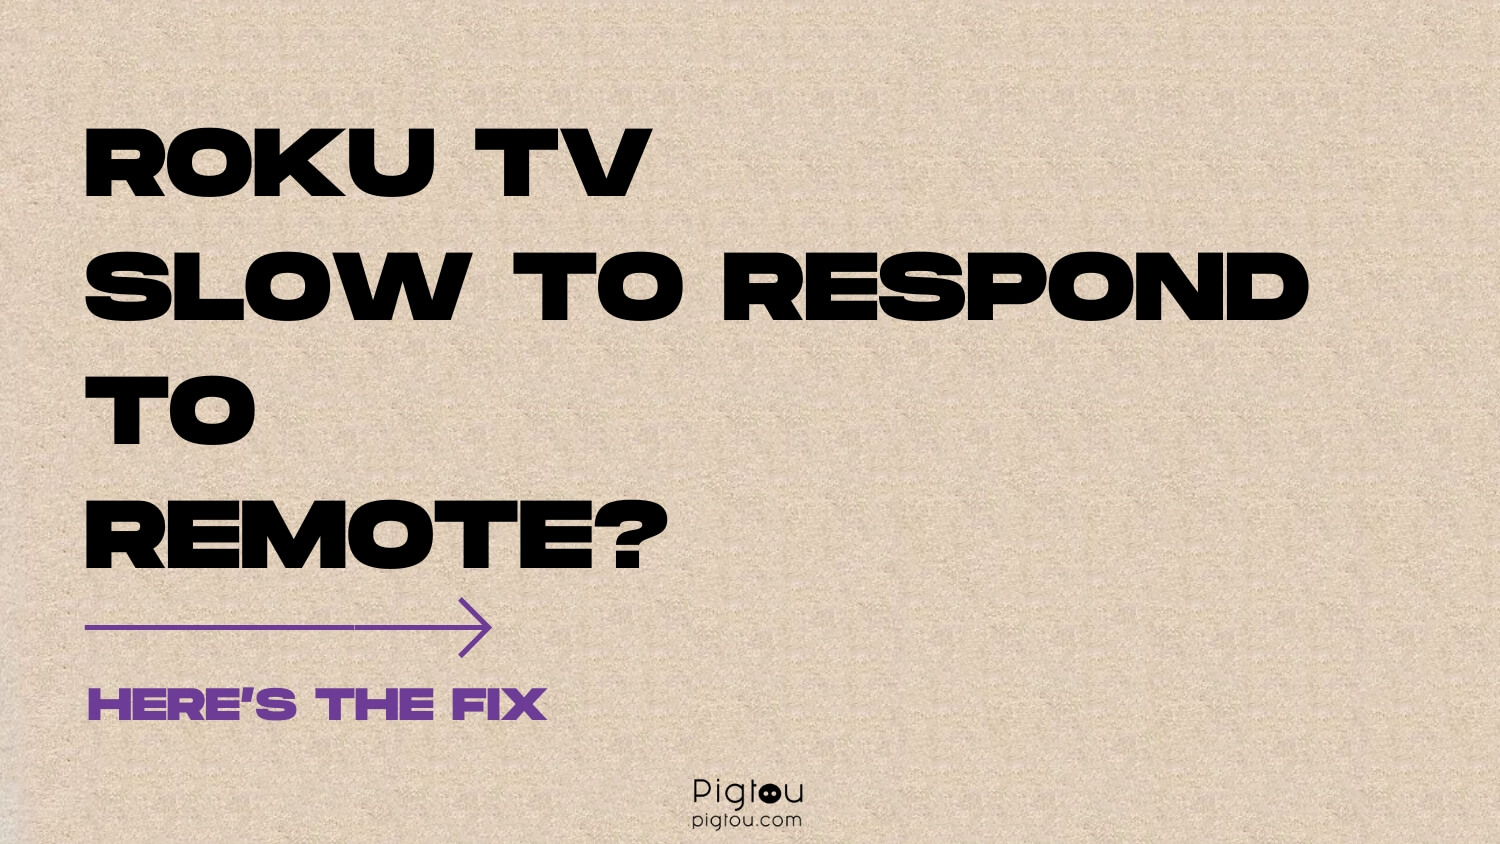 Roku TV Slow To Respond To Remote